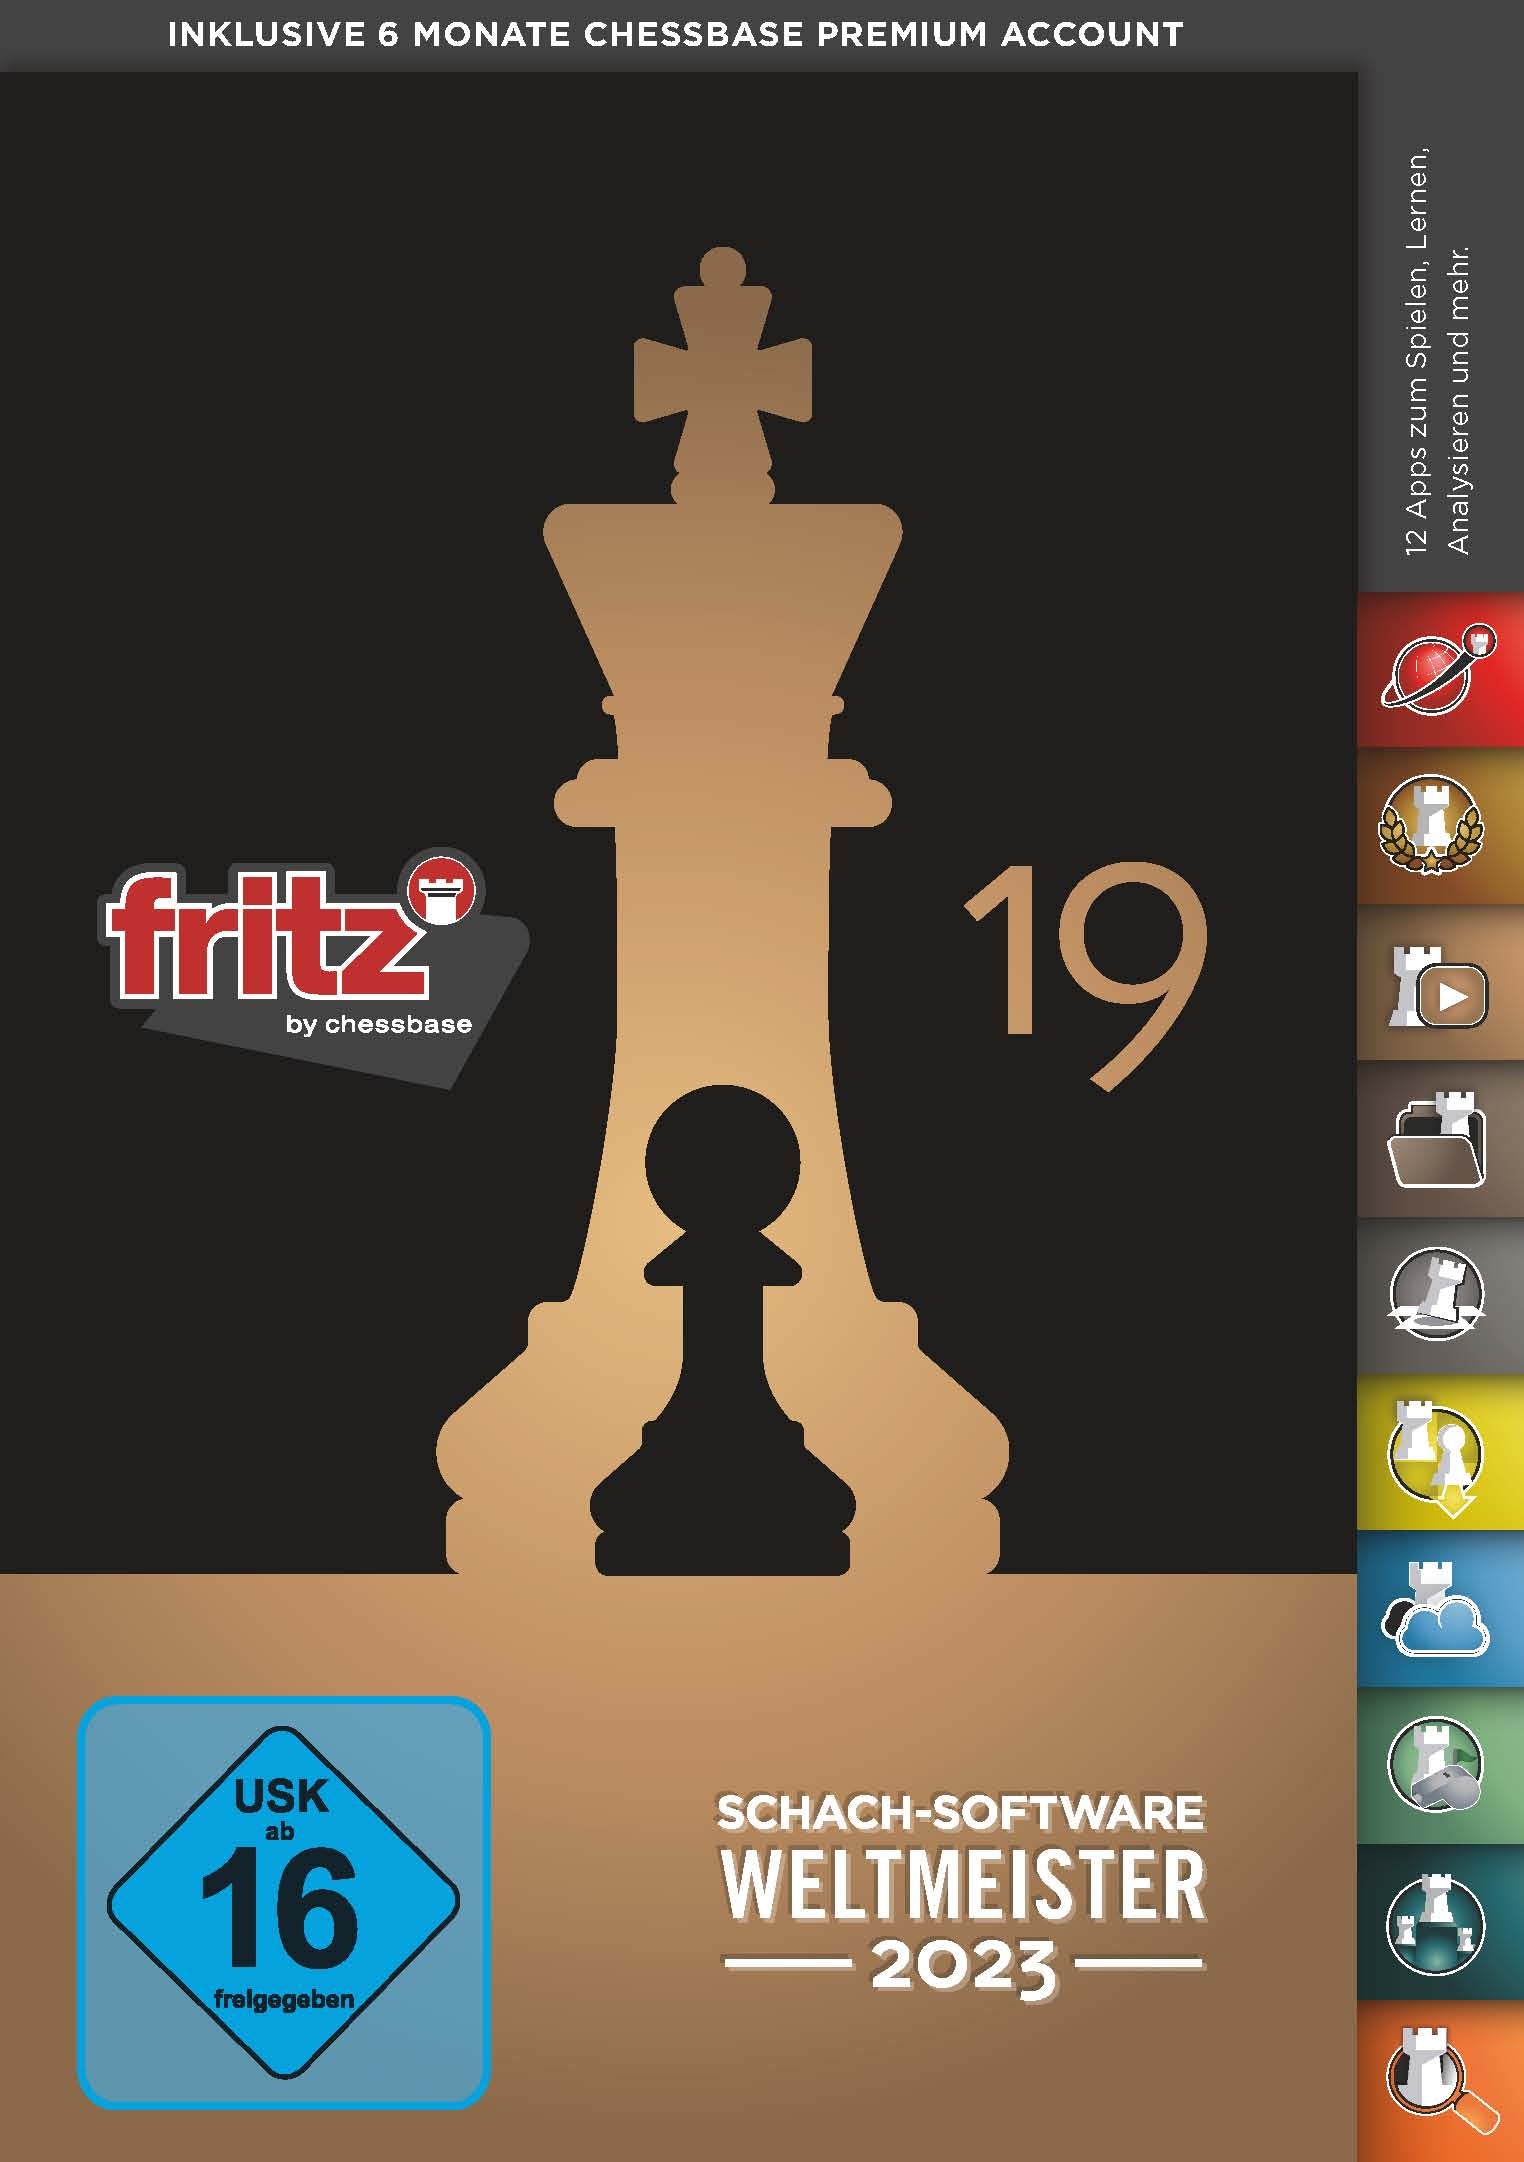 ChessBase 17 & Fritz 19 - Bundle